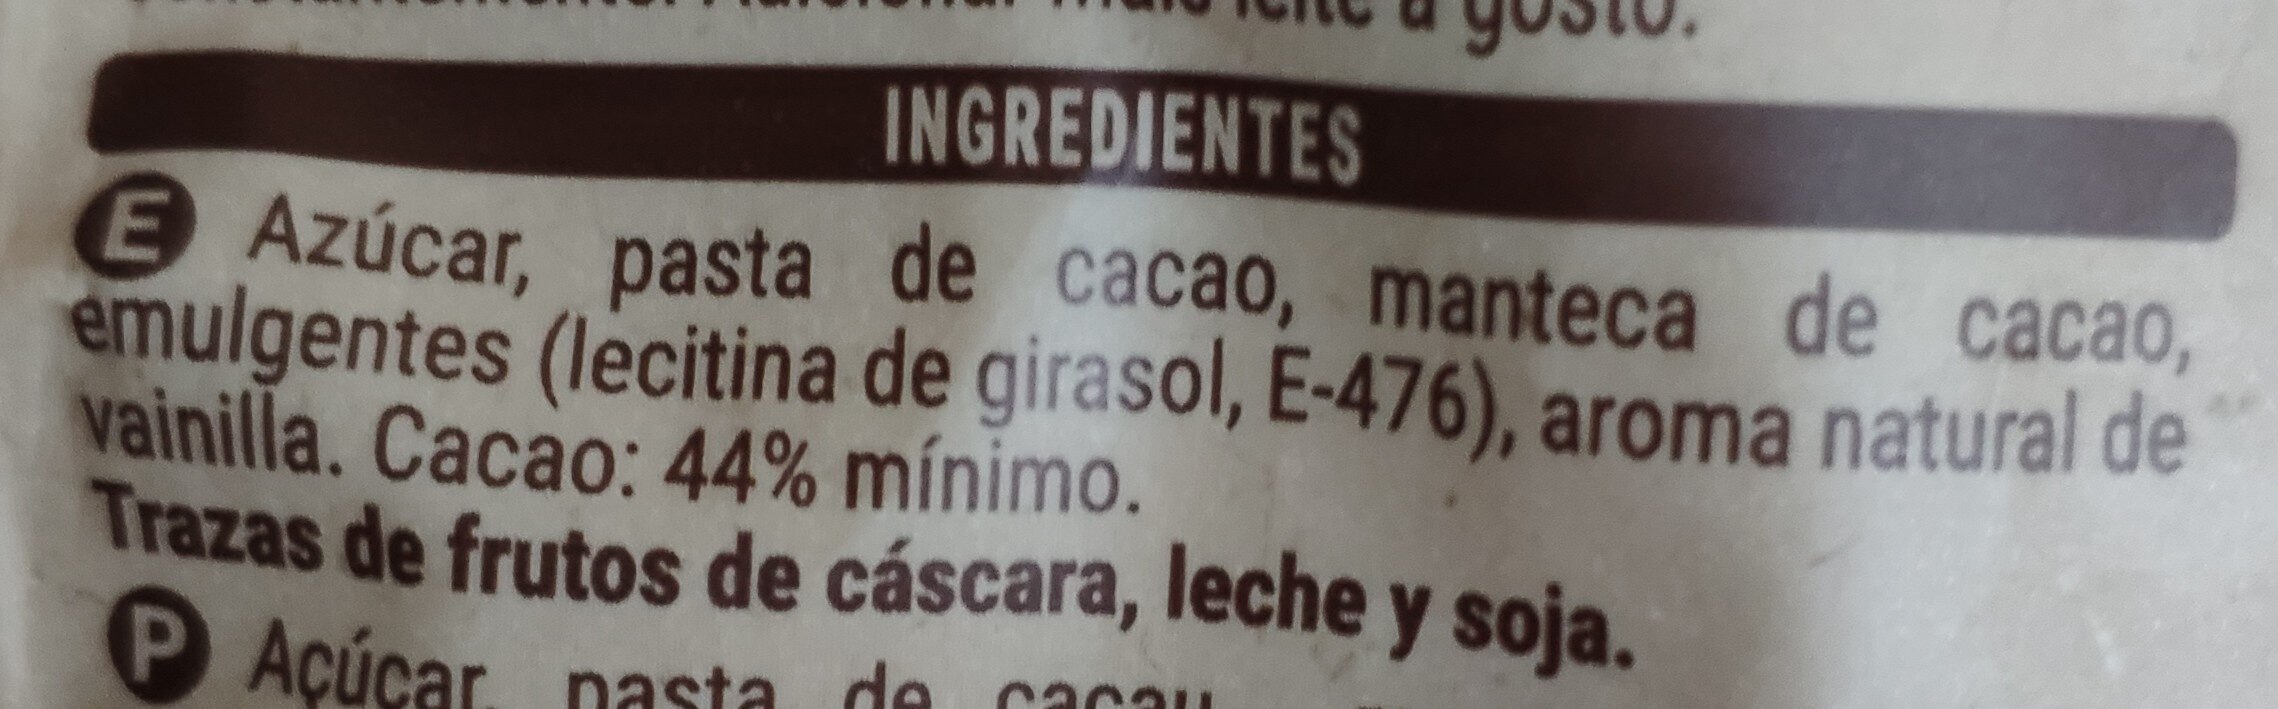 Choco Gotas Negro - Ingredients - es